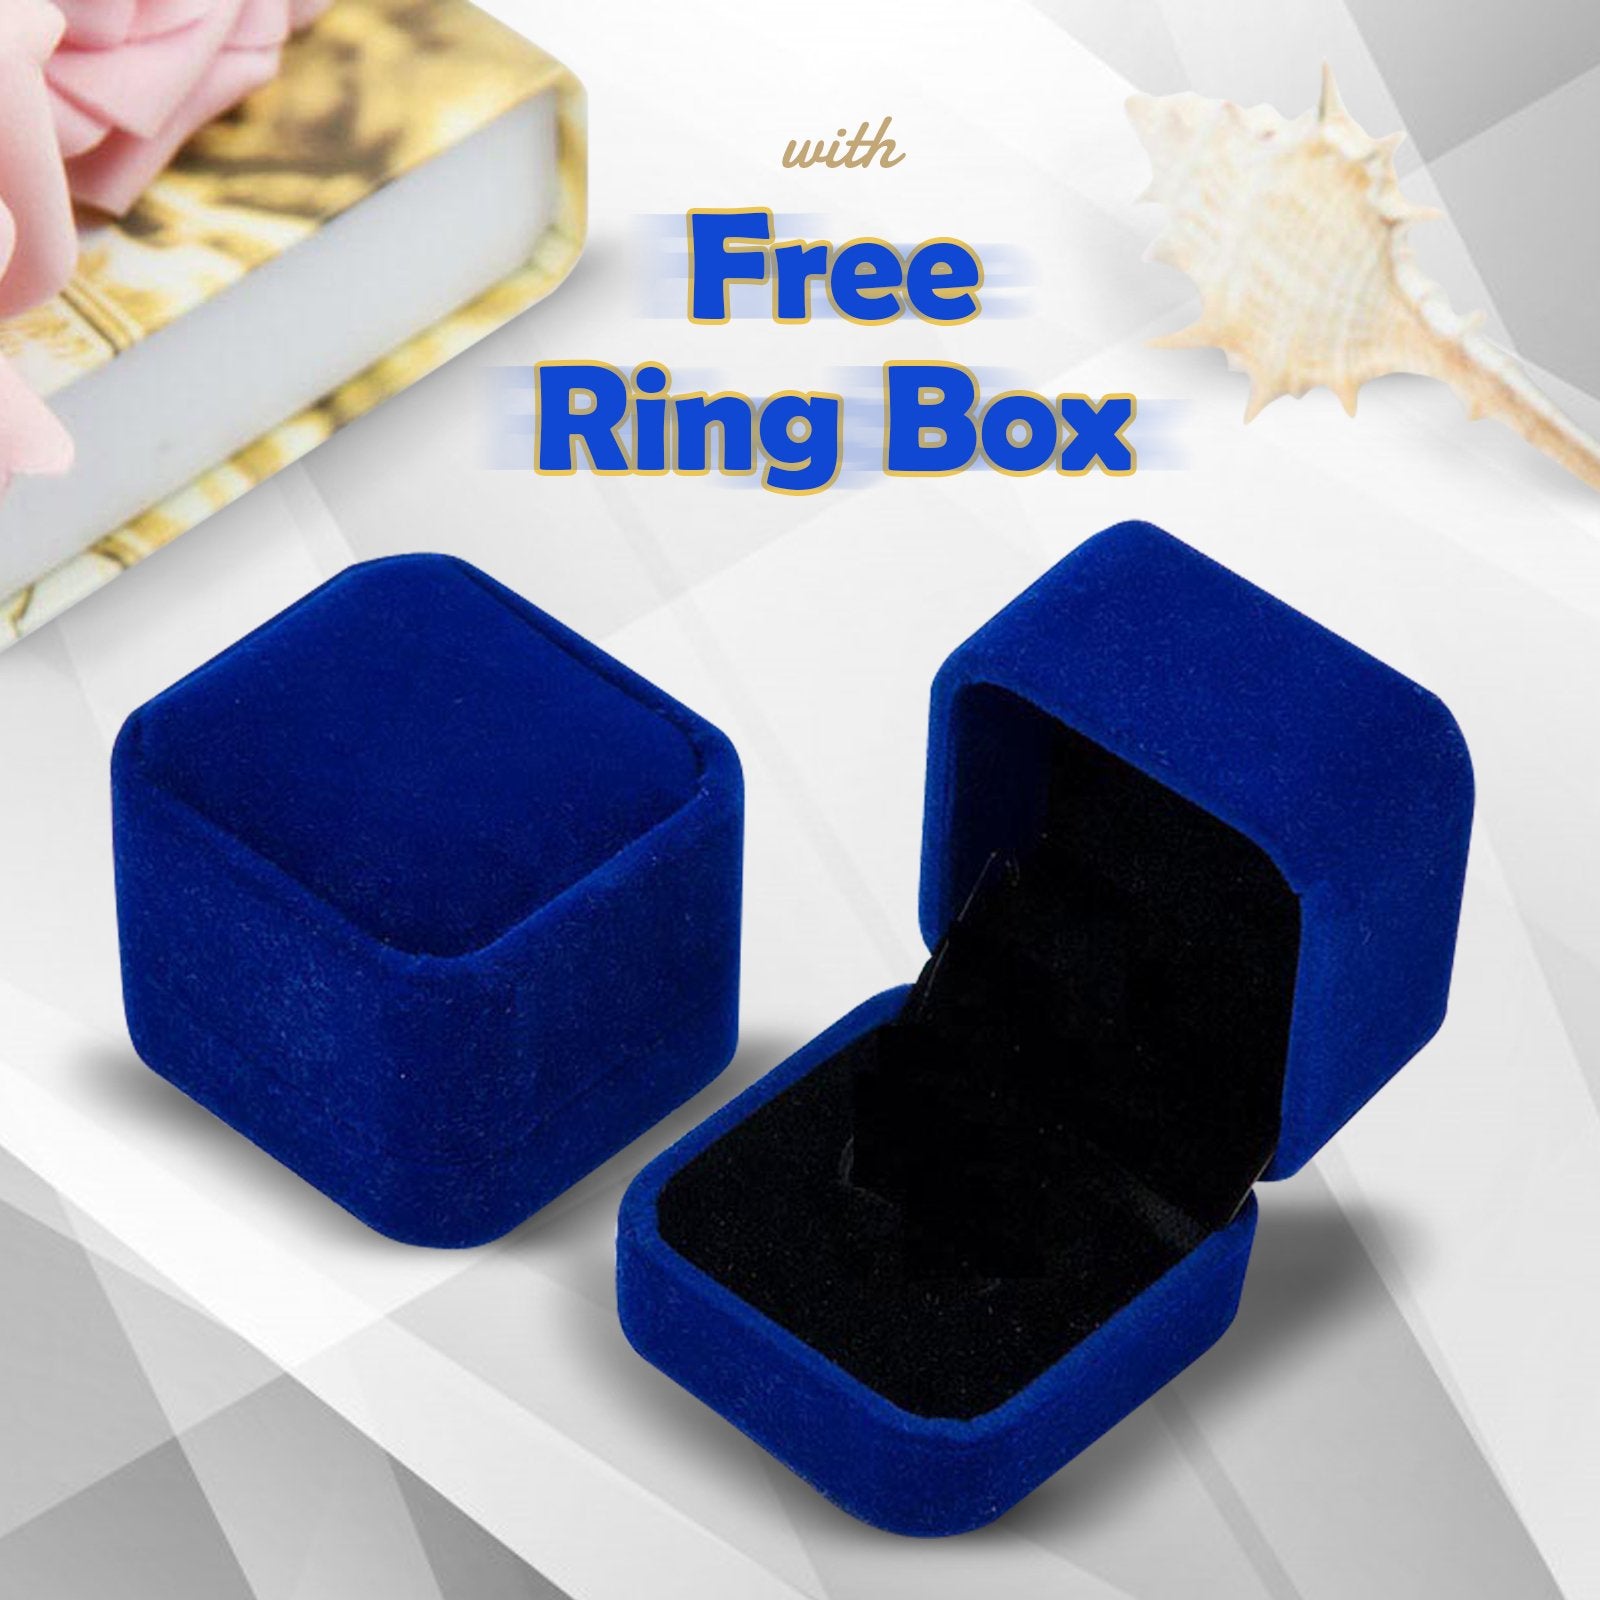 Titanium CZ Diamond Wedding Band Ring - 7mm Wide, Comfort Fit, 0.35Ct, White Gold Finish - Jewelry & Watches - Bijou Her -  -  - 